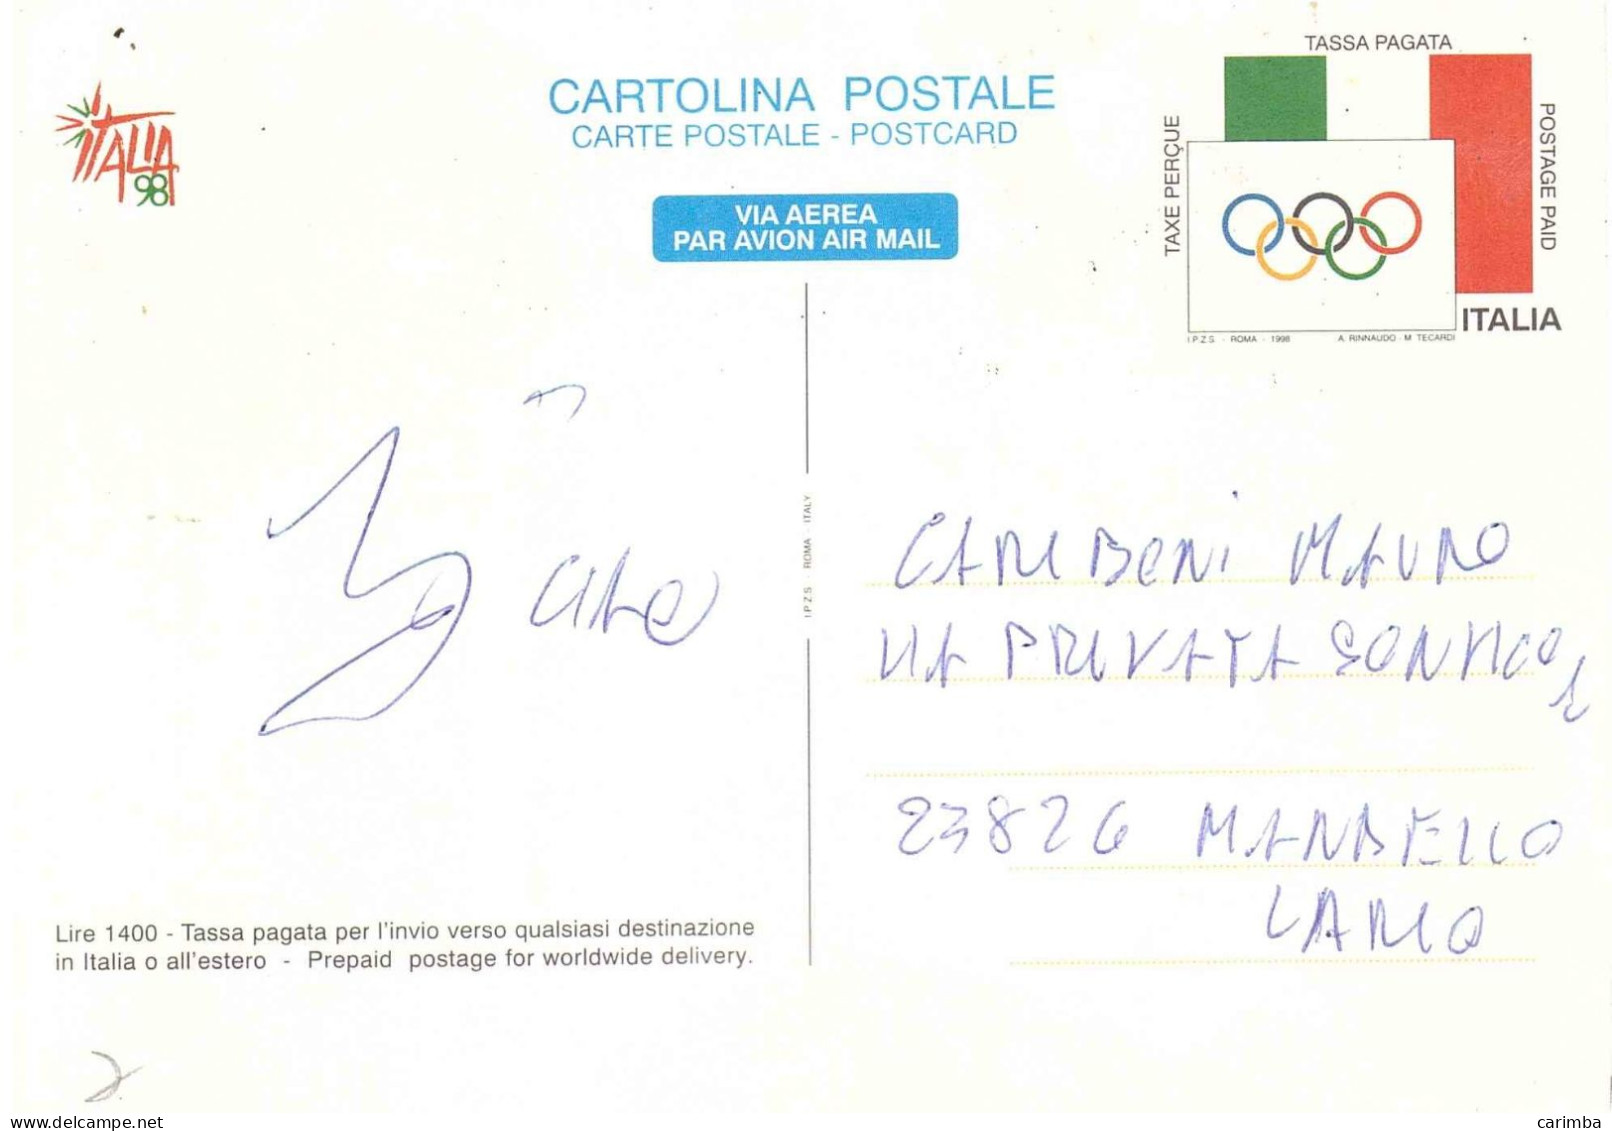 CARTOLINA POSTALE L.1400 ITALIA98 - Stamped Stationery